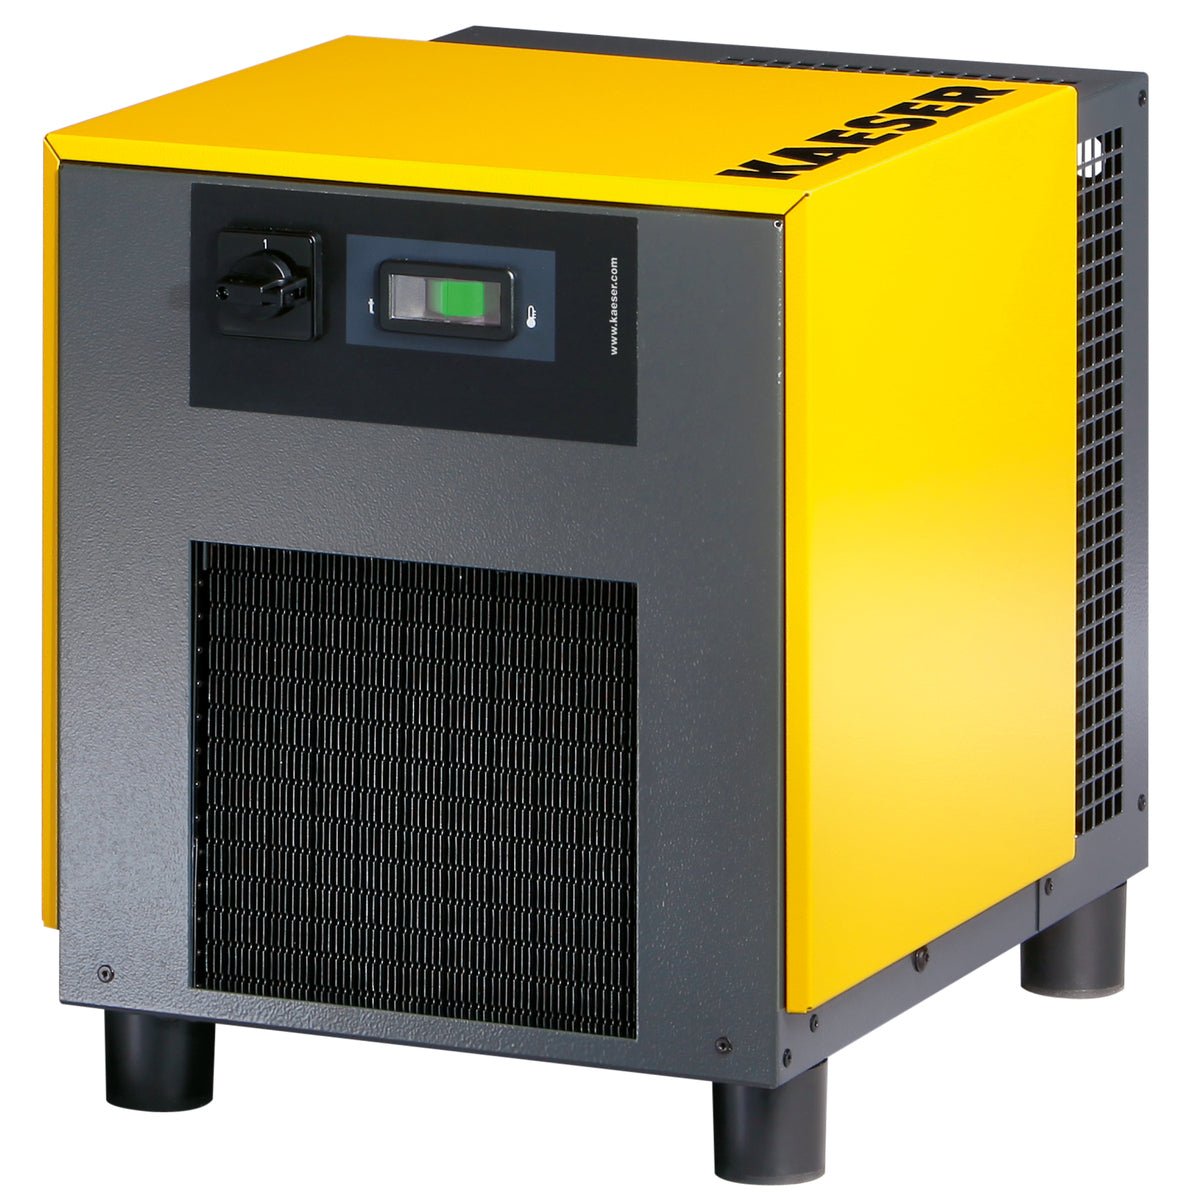 Kaeser refrigeration dryer TAH 7